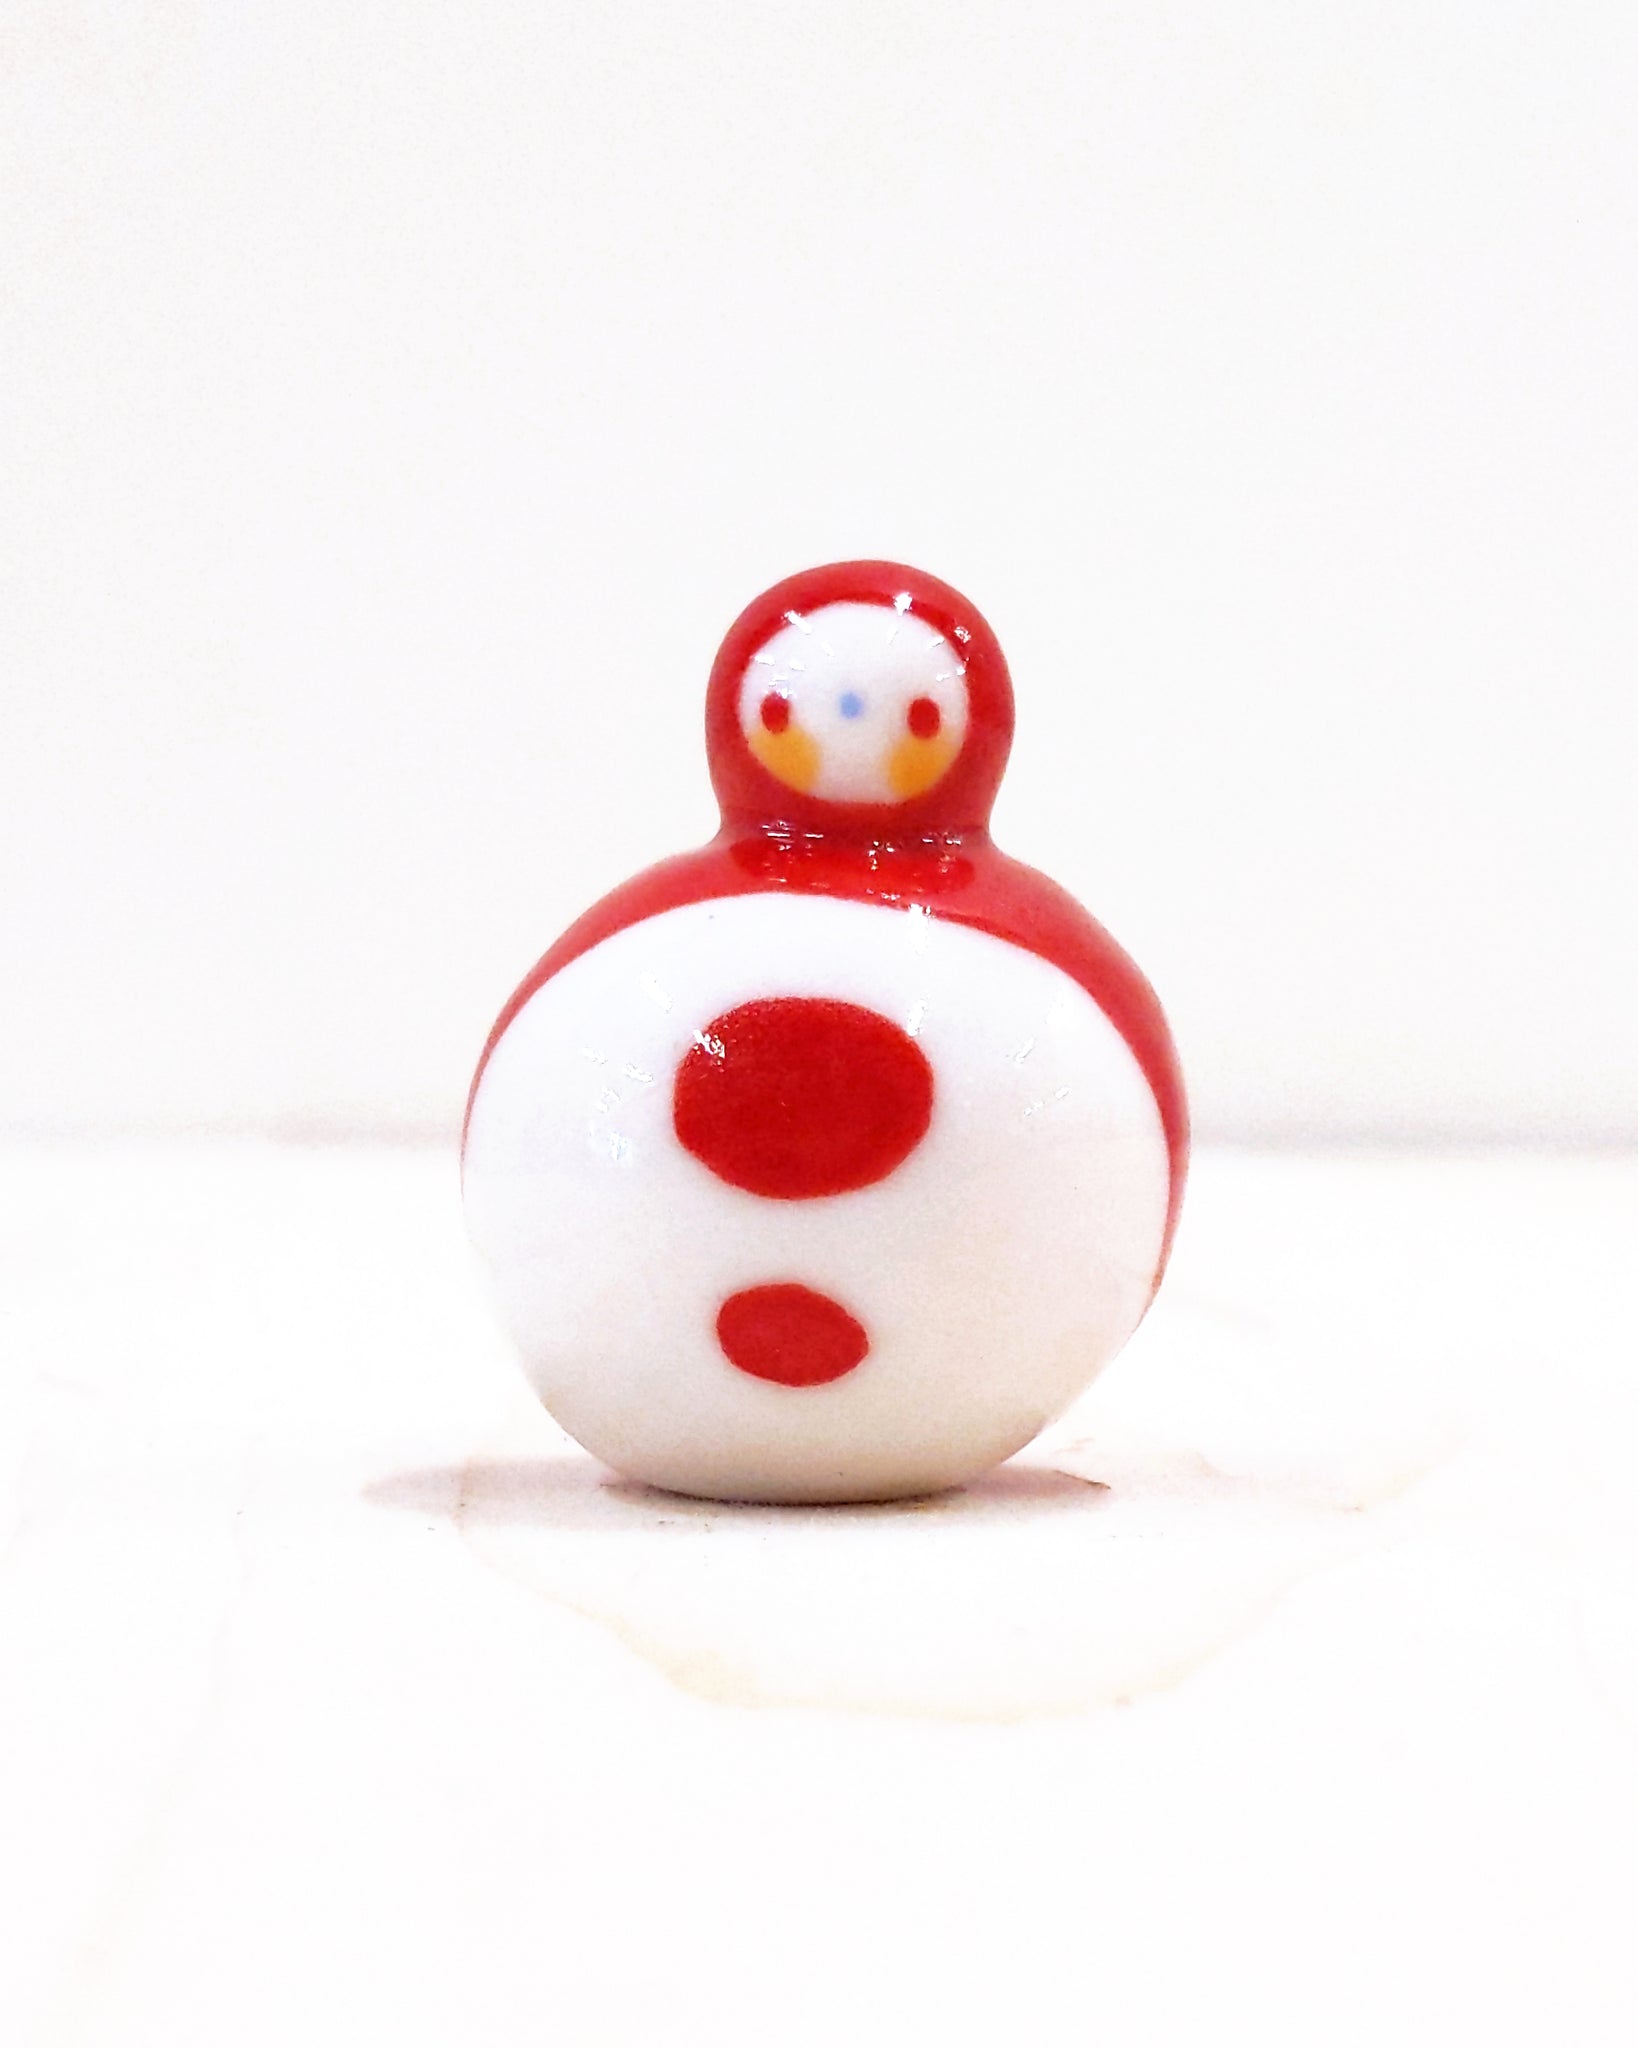 Birbauble Ceramic Art Toy [BB23.019: Classic in Red, 1.25" Body Diameter]